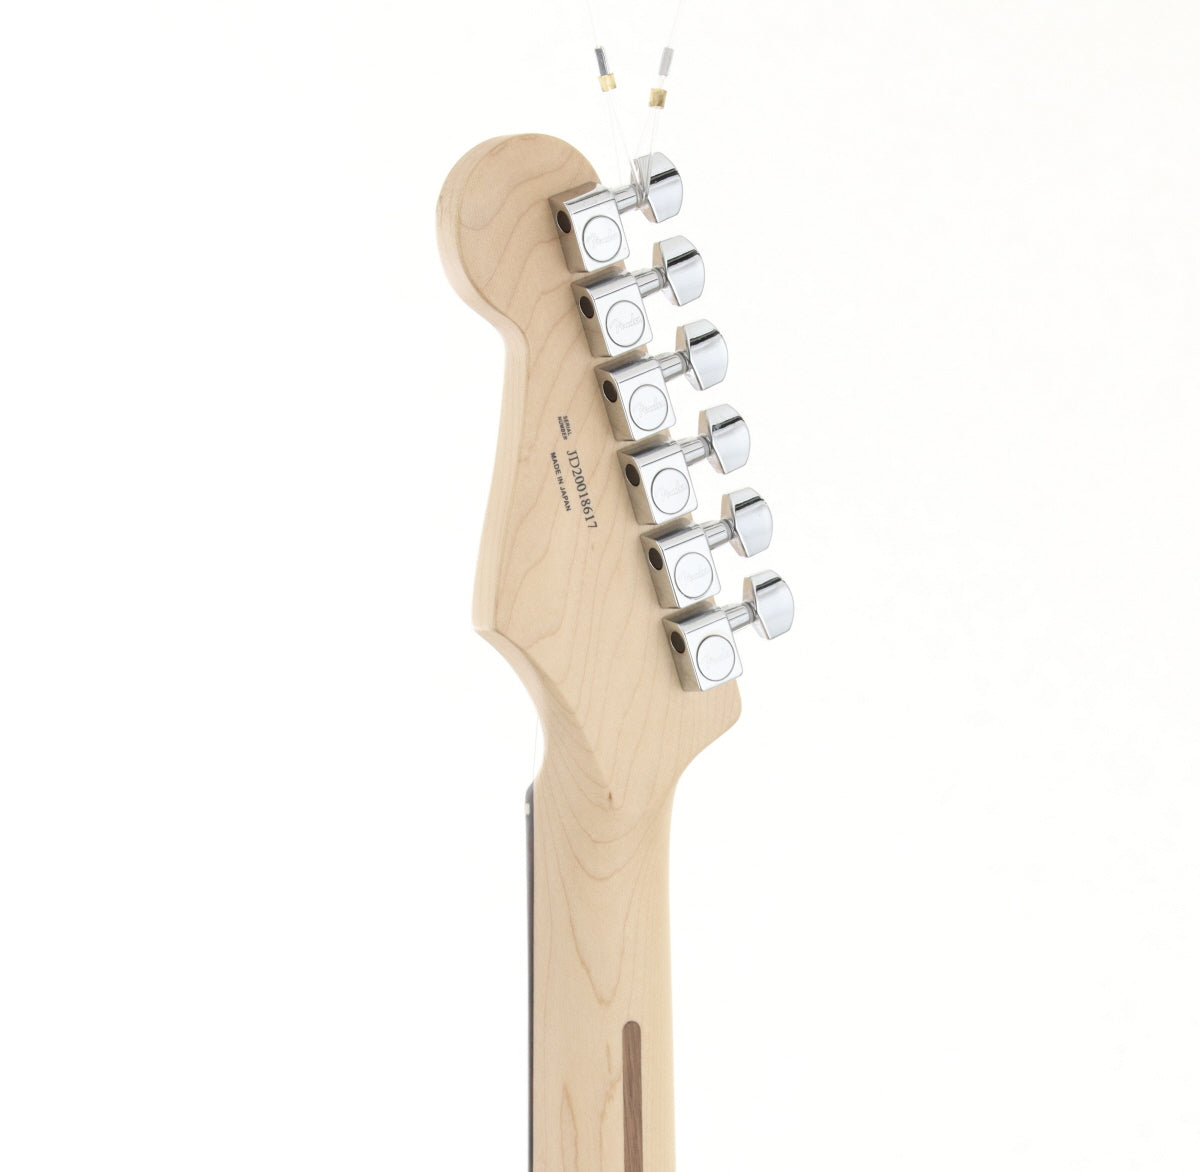 [SN JD20018617] USED Fender / MIJ Aerodyne II Stratocaster SSS Rosewood Black [06]